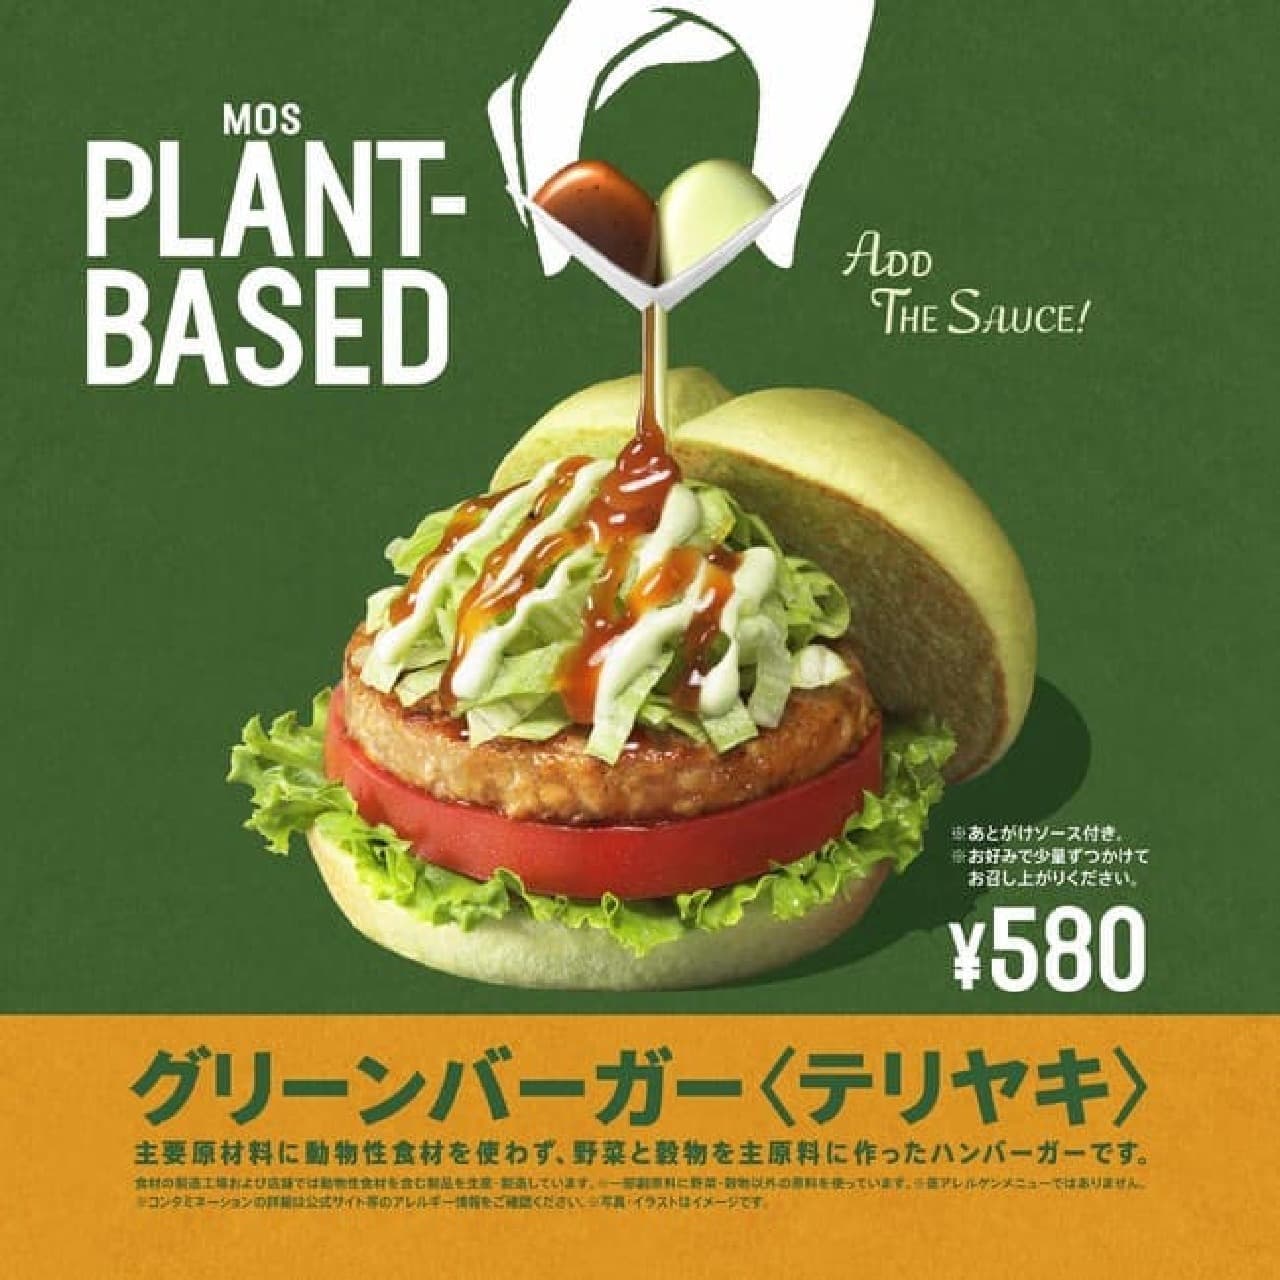 Mos Burger "Green Burger [Teriyaki]"